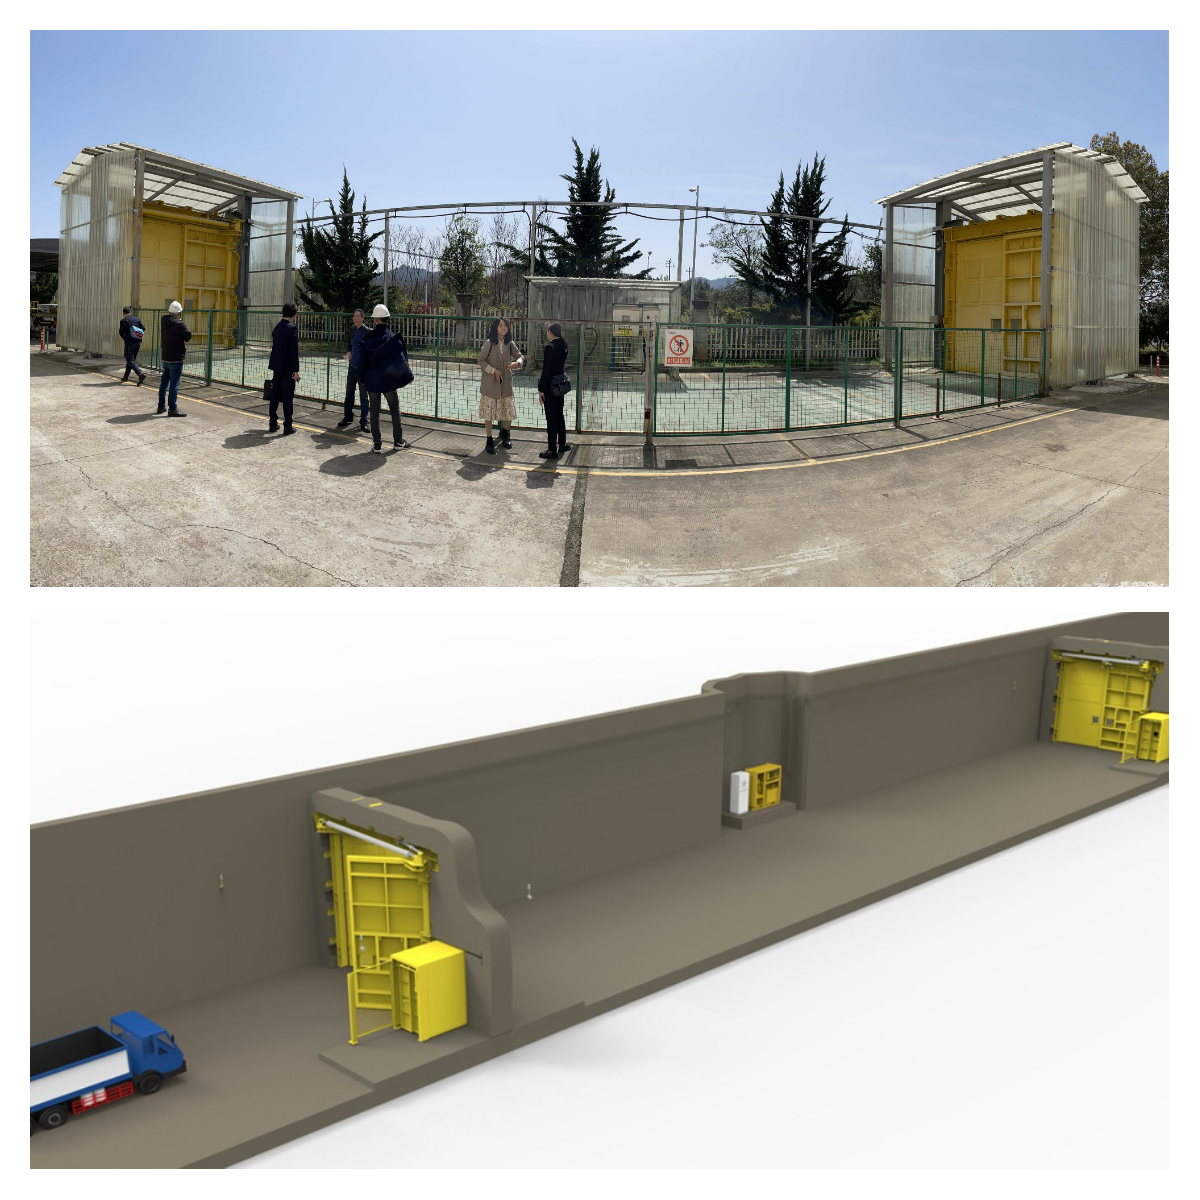 Sistema de bloqueo de aire neumático de alta presión/Puerta de ventilación de seguridad para minas subterráneas para carbón/mina/túnel